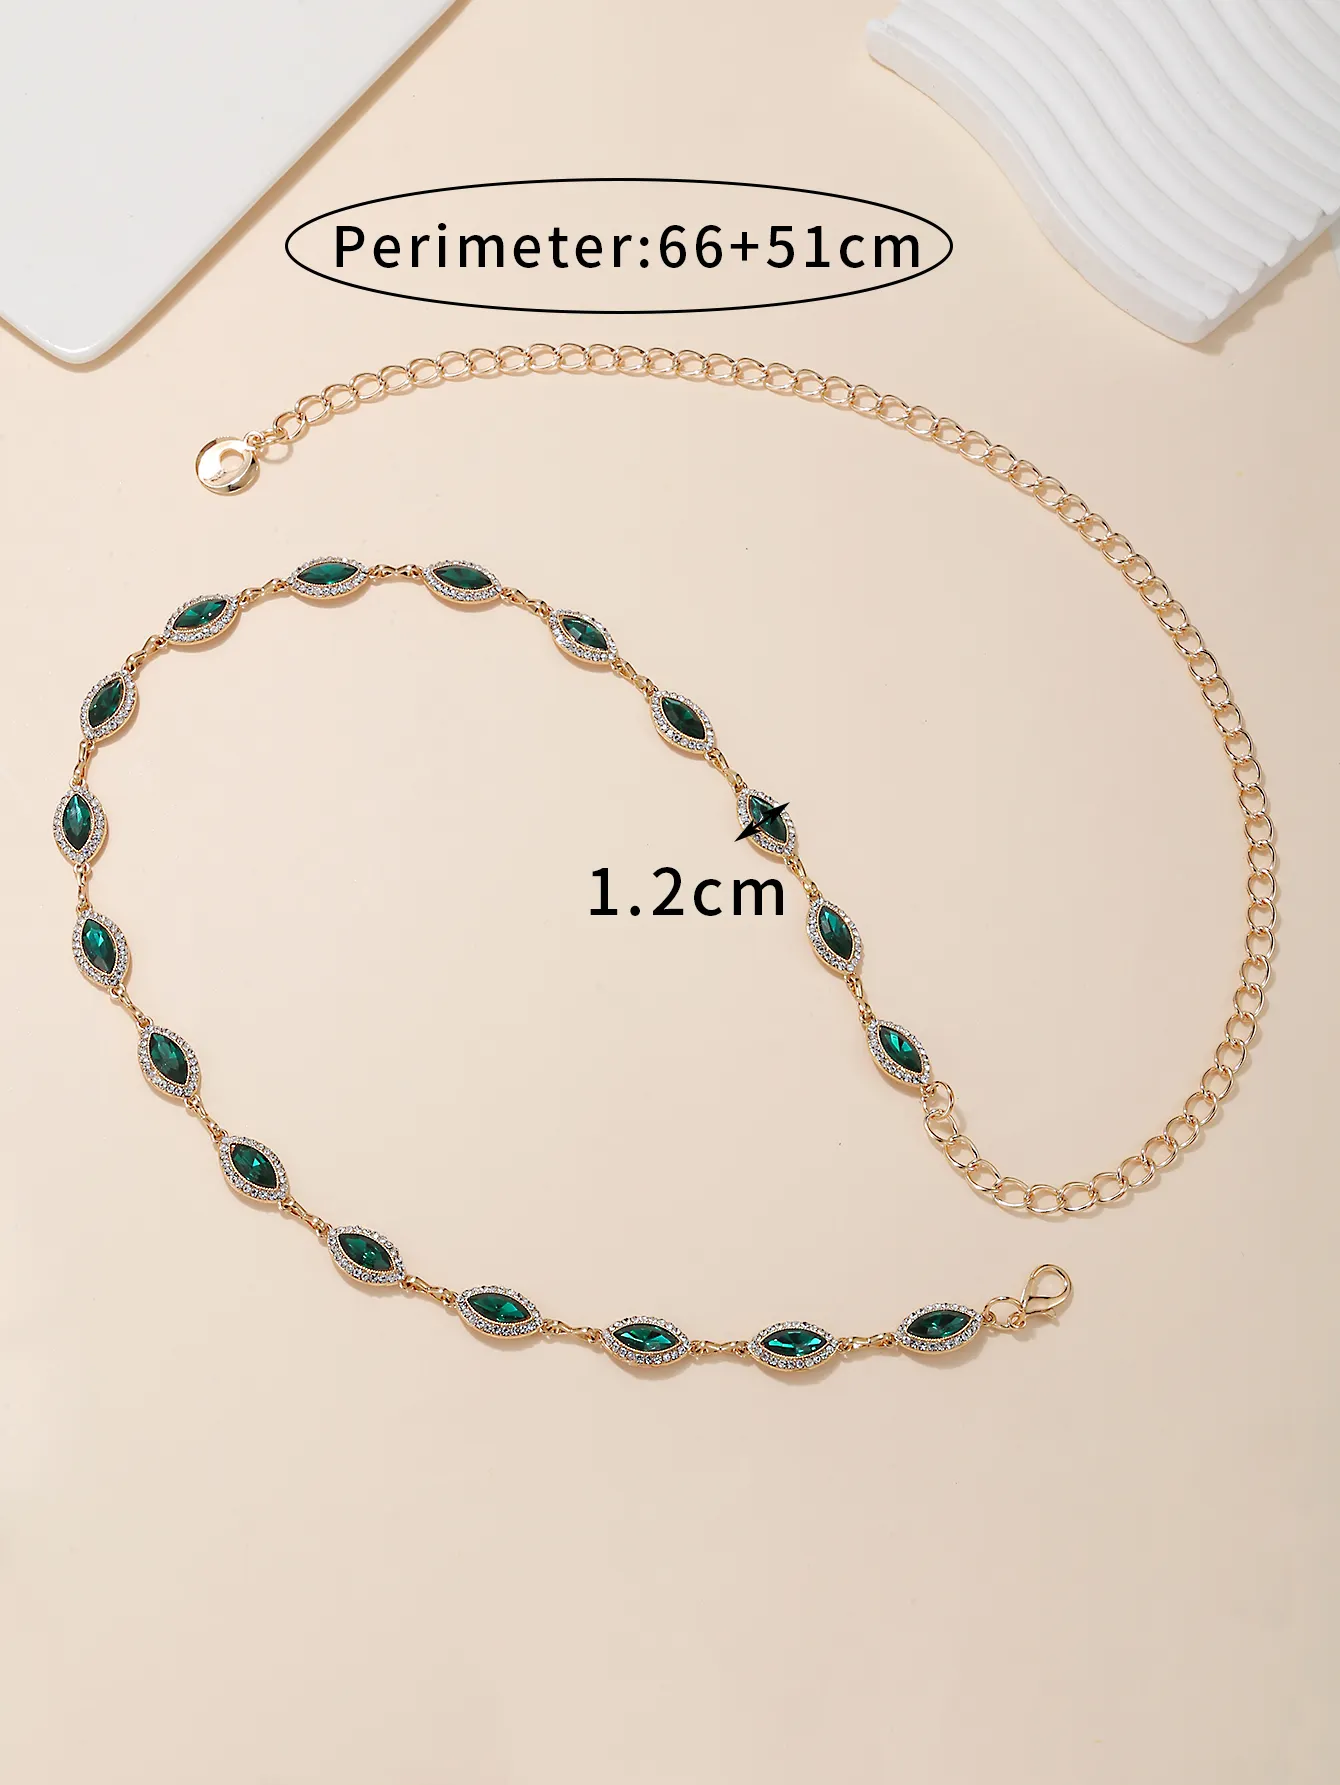 Trending hot products Diamond Chain Belts Women Lady Dress Jewelry Emerald Green Rhinestone Belly Chains